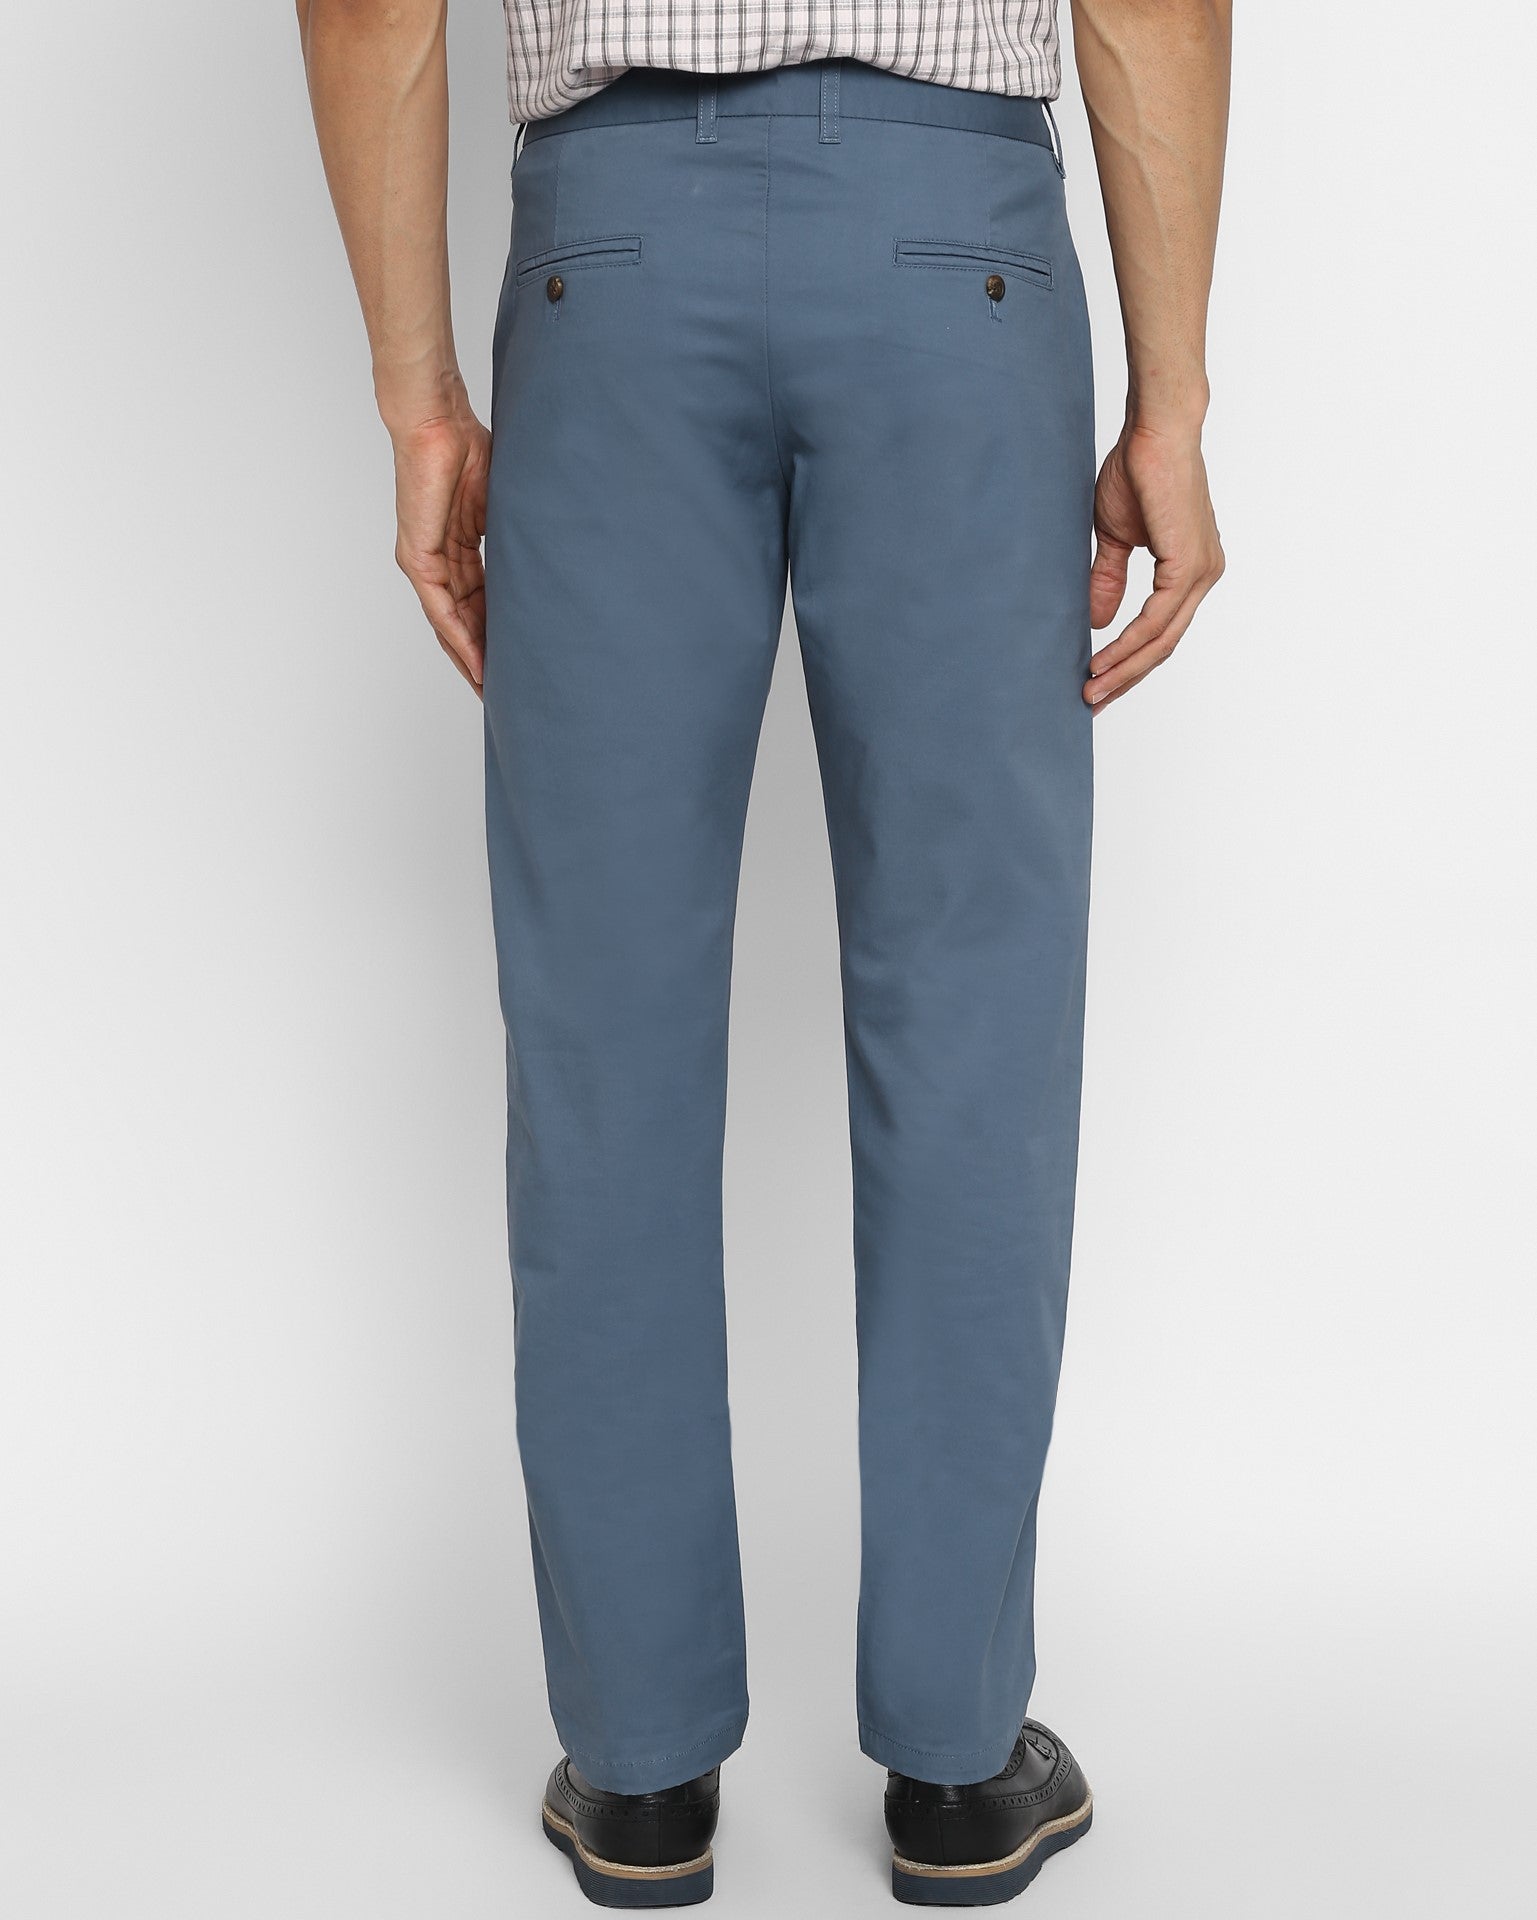 Stockport Wool Linen Light Blue pants